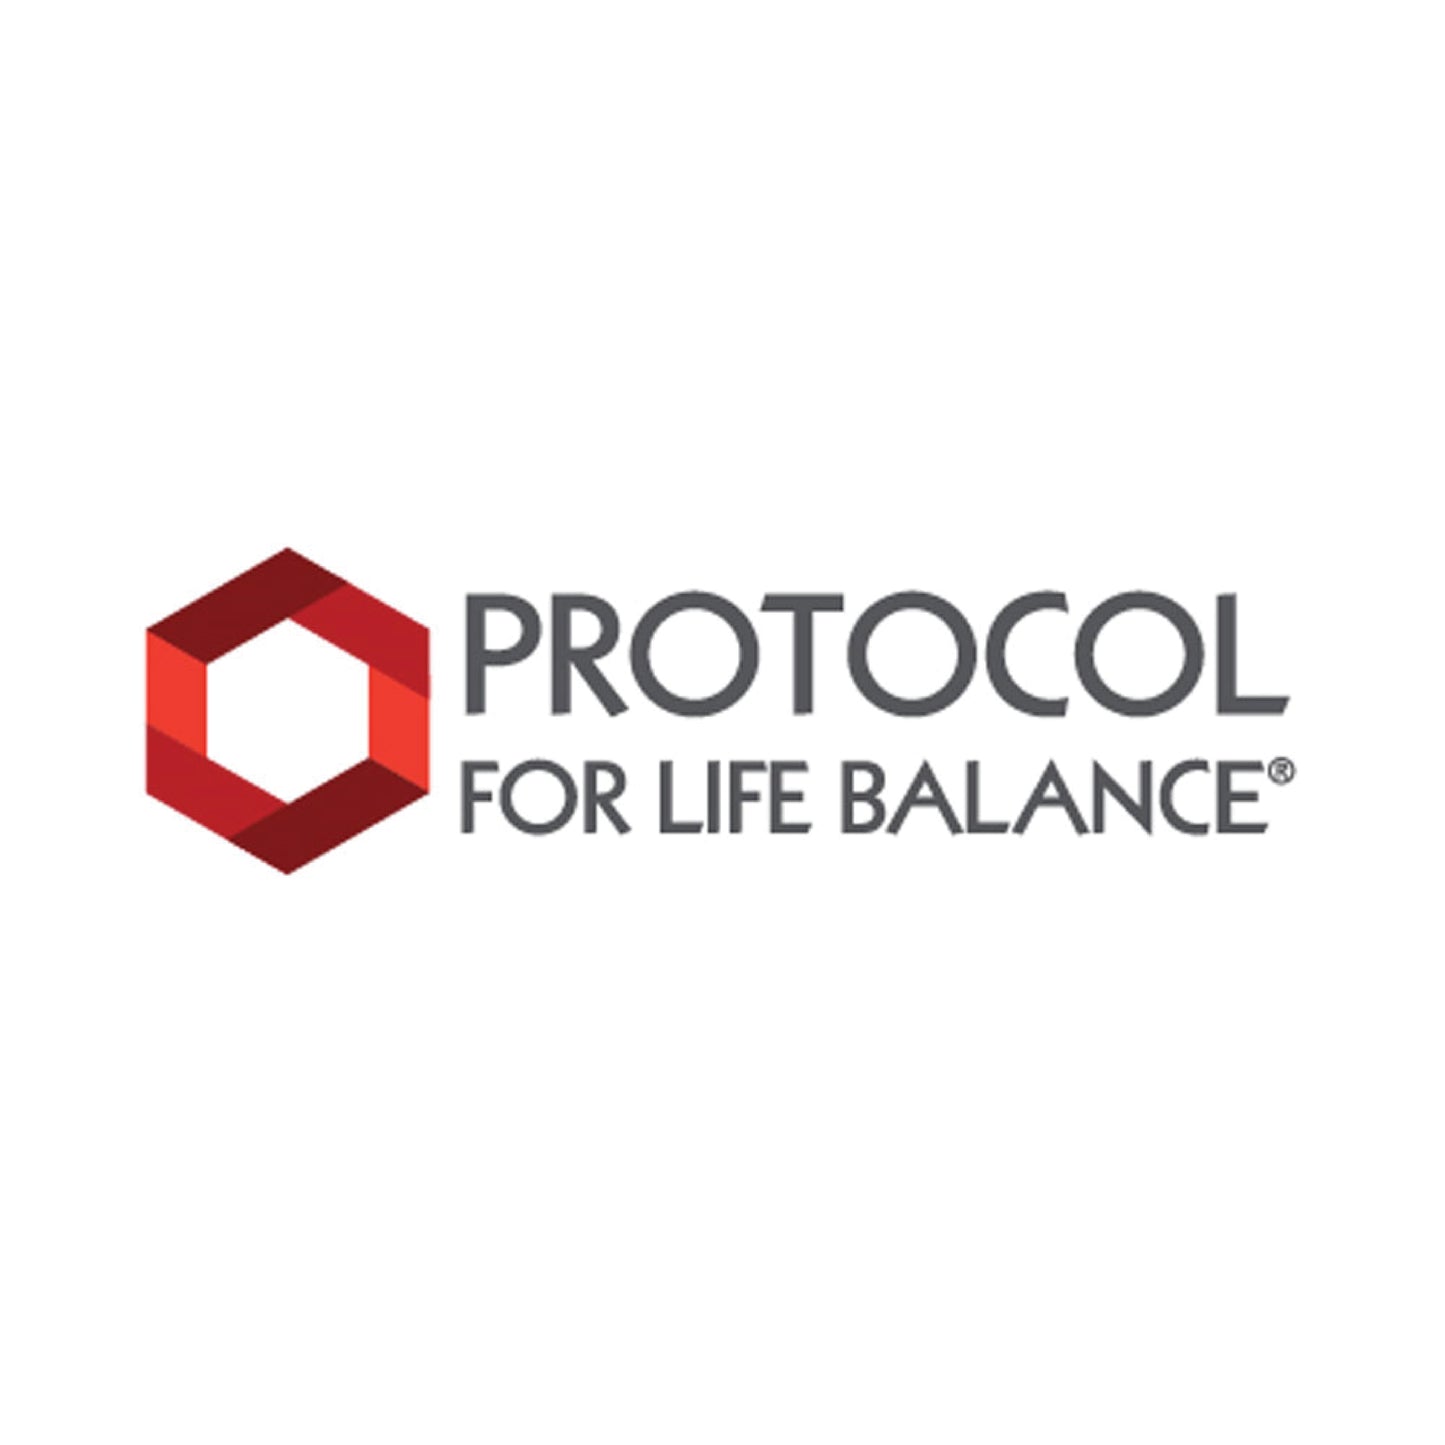 Protocol for Life Balance, Bromelain, 2400 GDU/g, 500 mg, 90 Veg Capsules